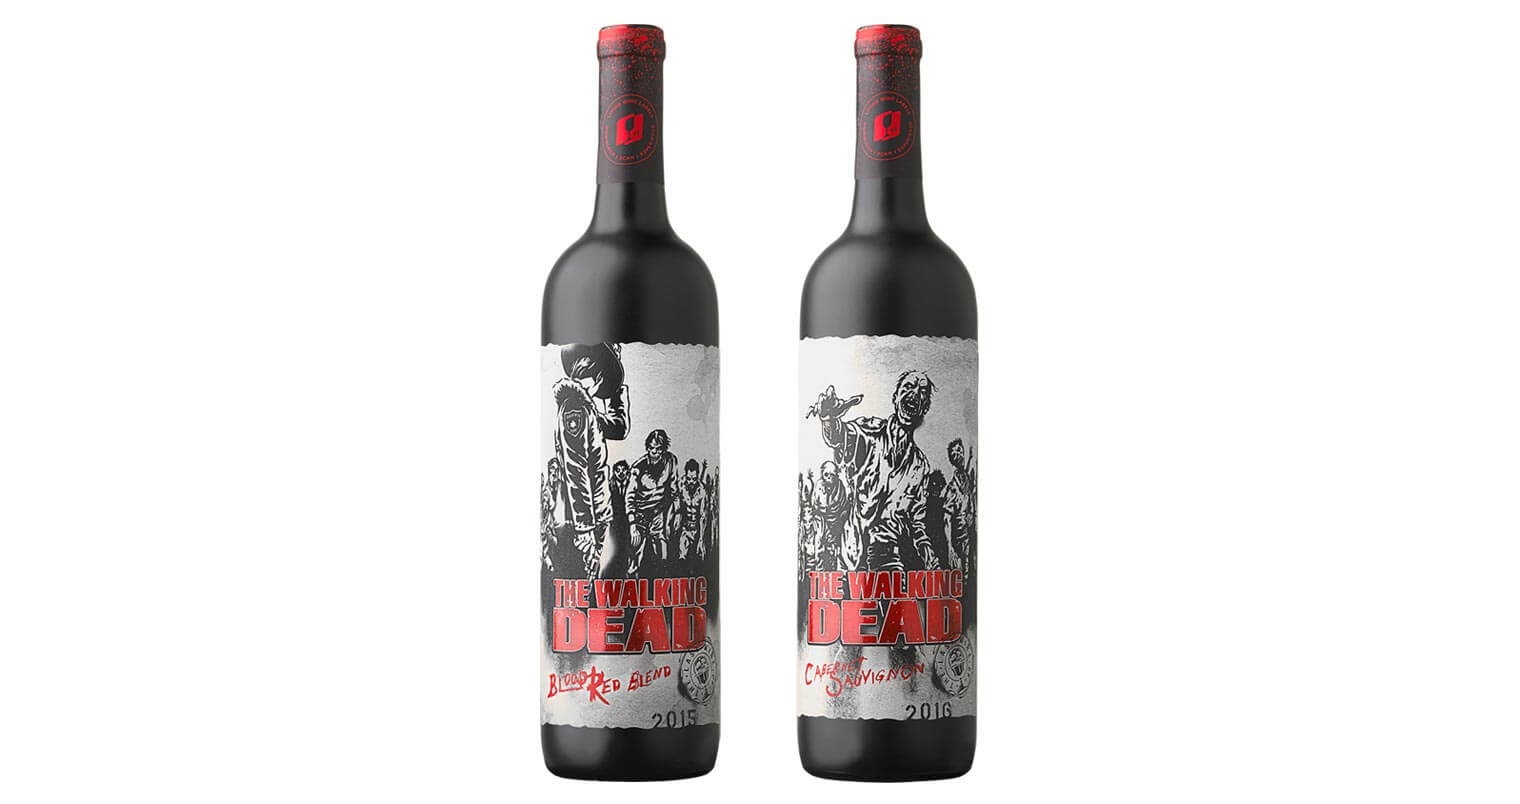 Walking Dead Wine Labels, featured image